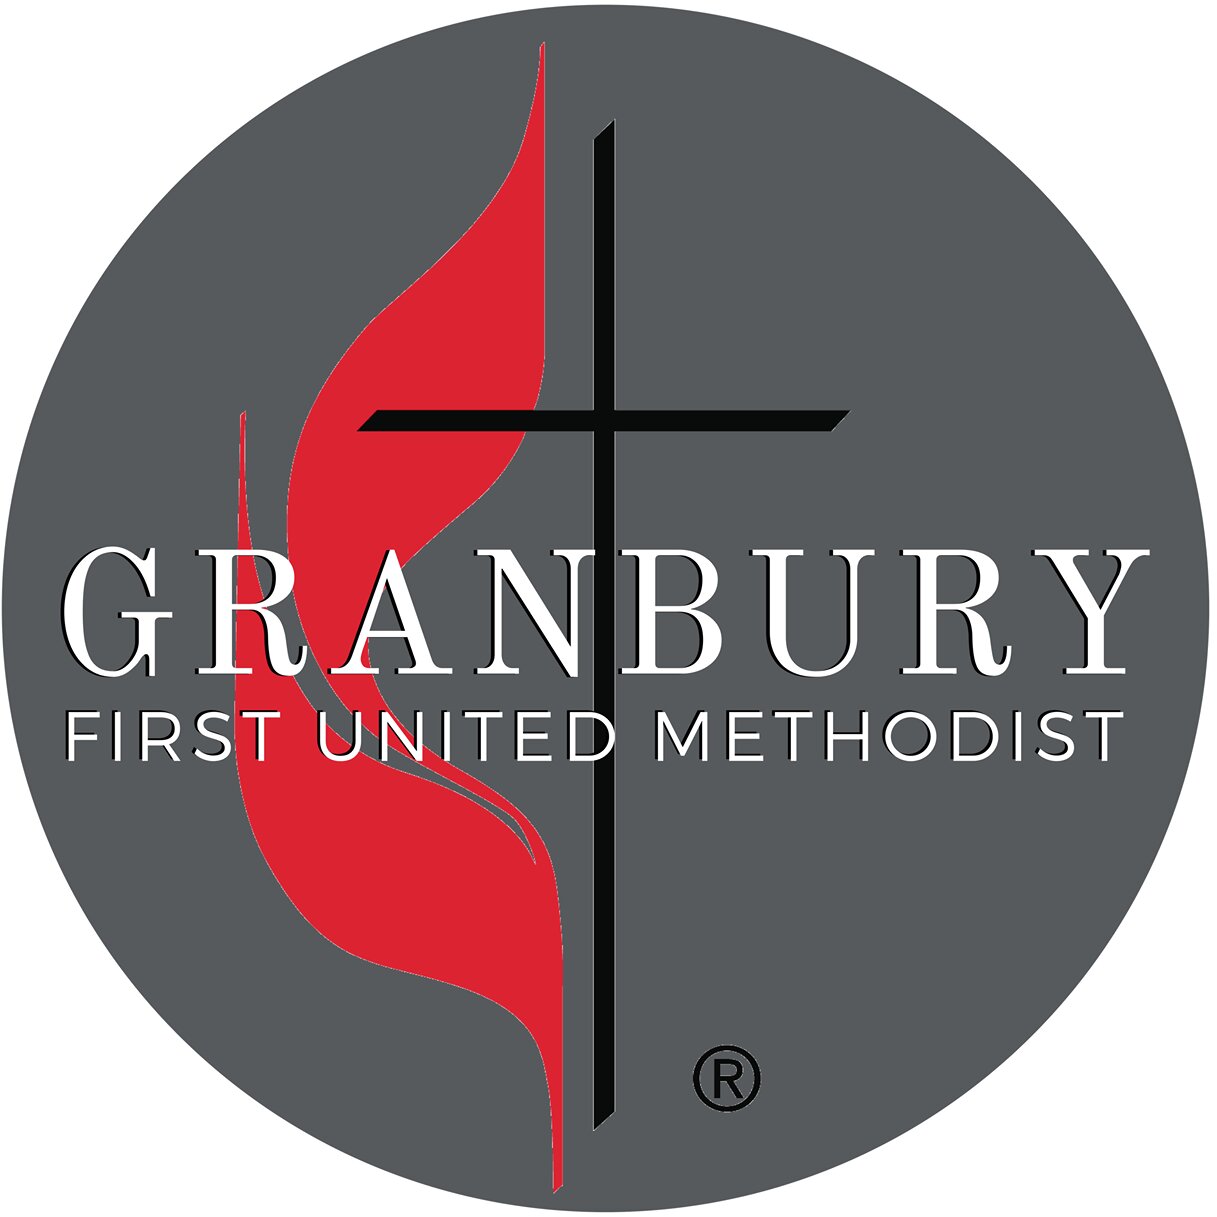 The First United Methodist Church of Granbury